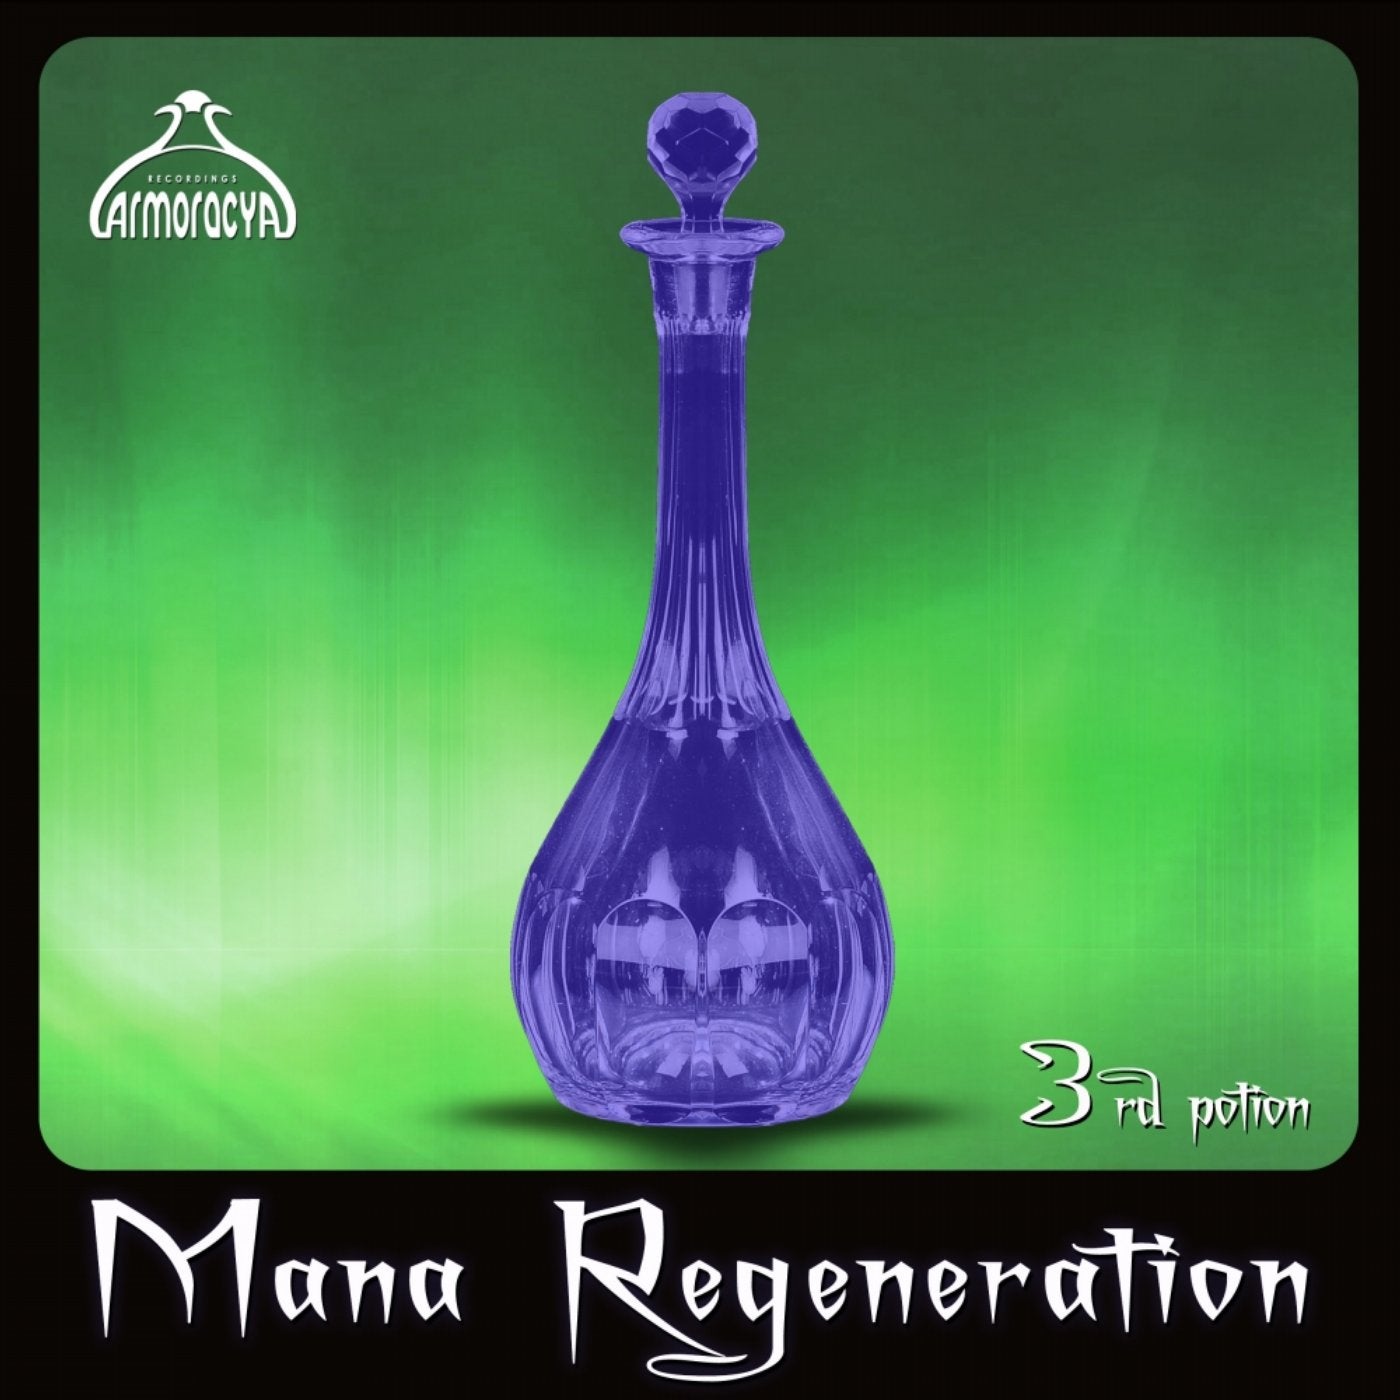 Mana Regeneration 3rd Potion